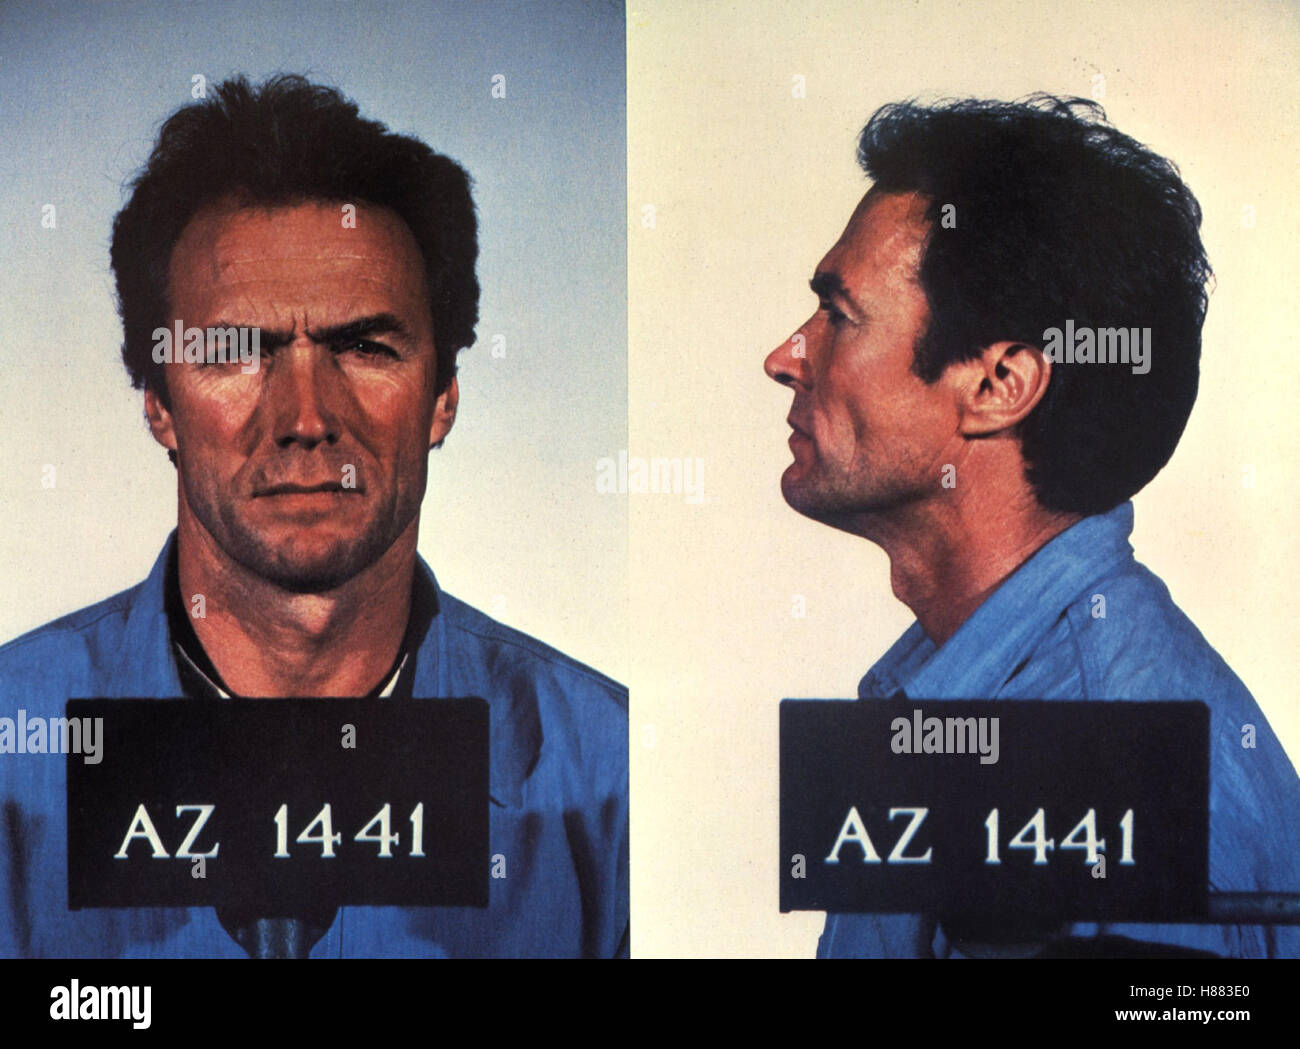 Die Flucht von Alcatraz (ESCAPE FROM ALCATRAZ) USA 1979, Regie : Don Siegel, CLINT EASTWOOD, Ausdruck : Détenu, Verbrecherfoto Banque D'Images